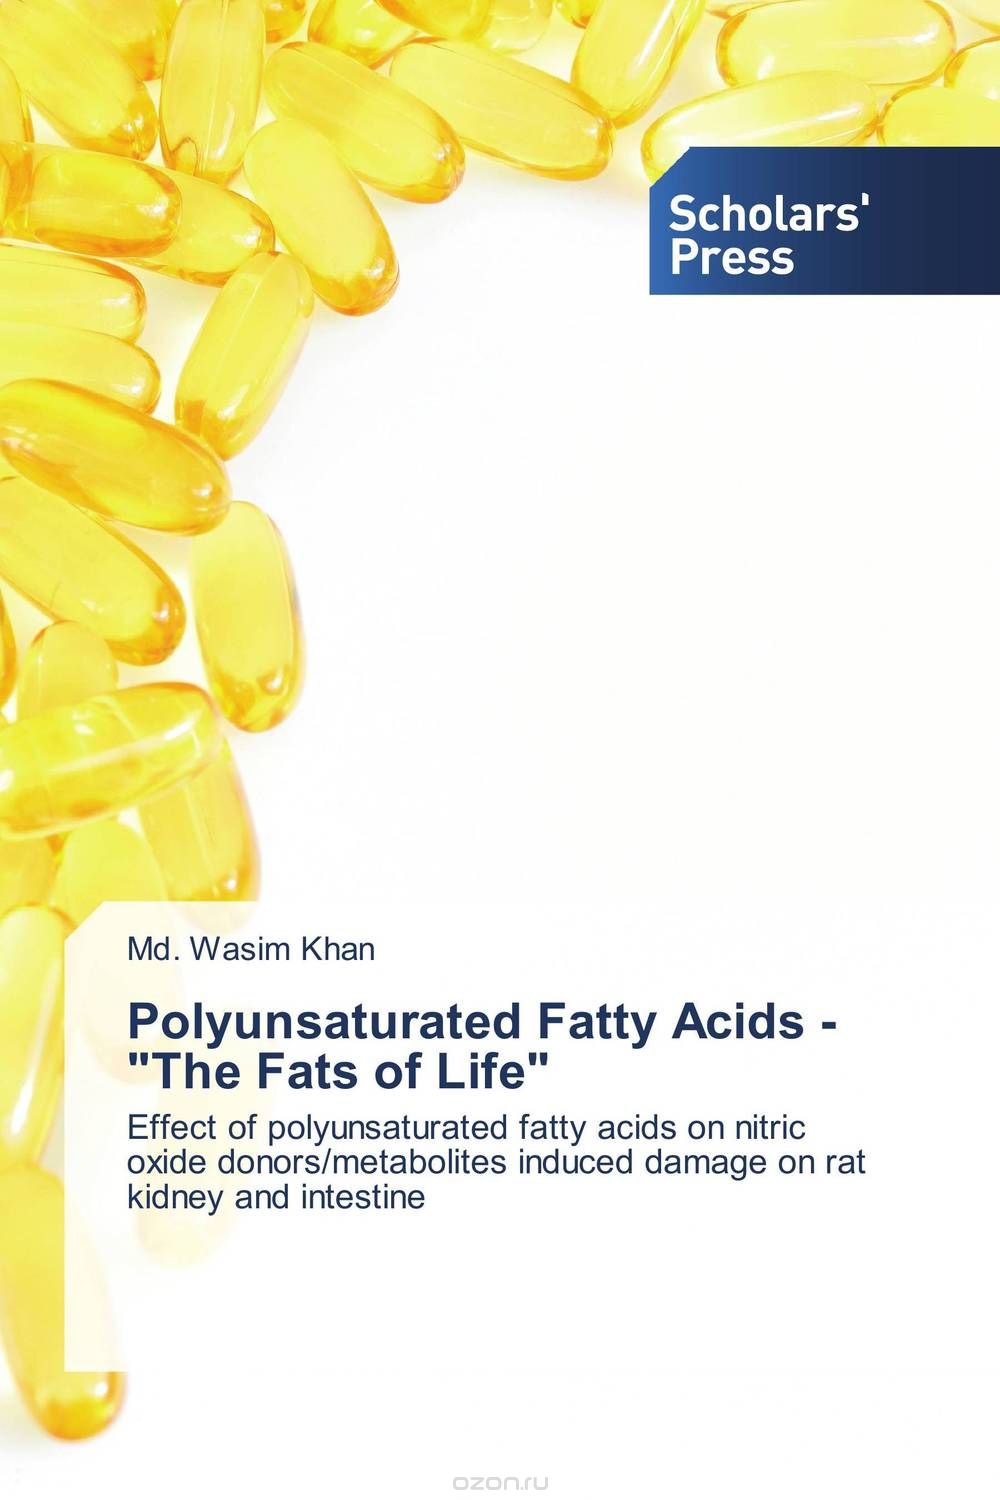 Скачать книгу "Polyunsaturated Fatty Acids - "The Fats of Life""